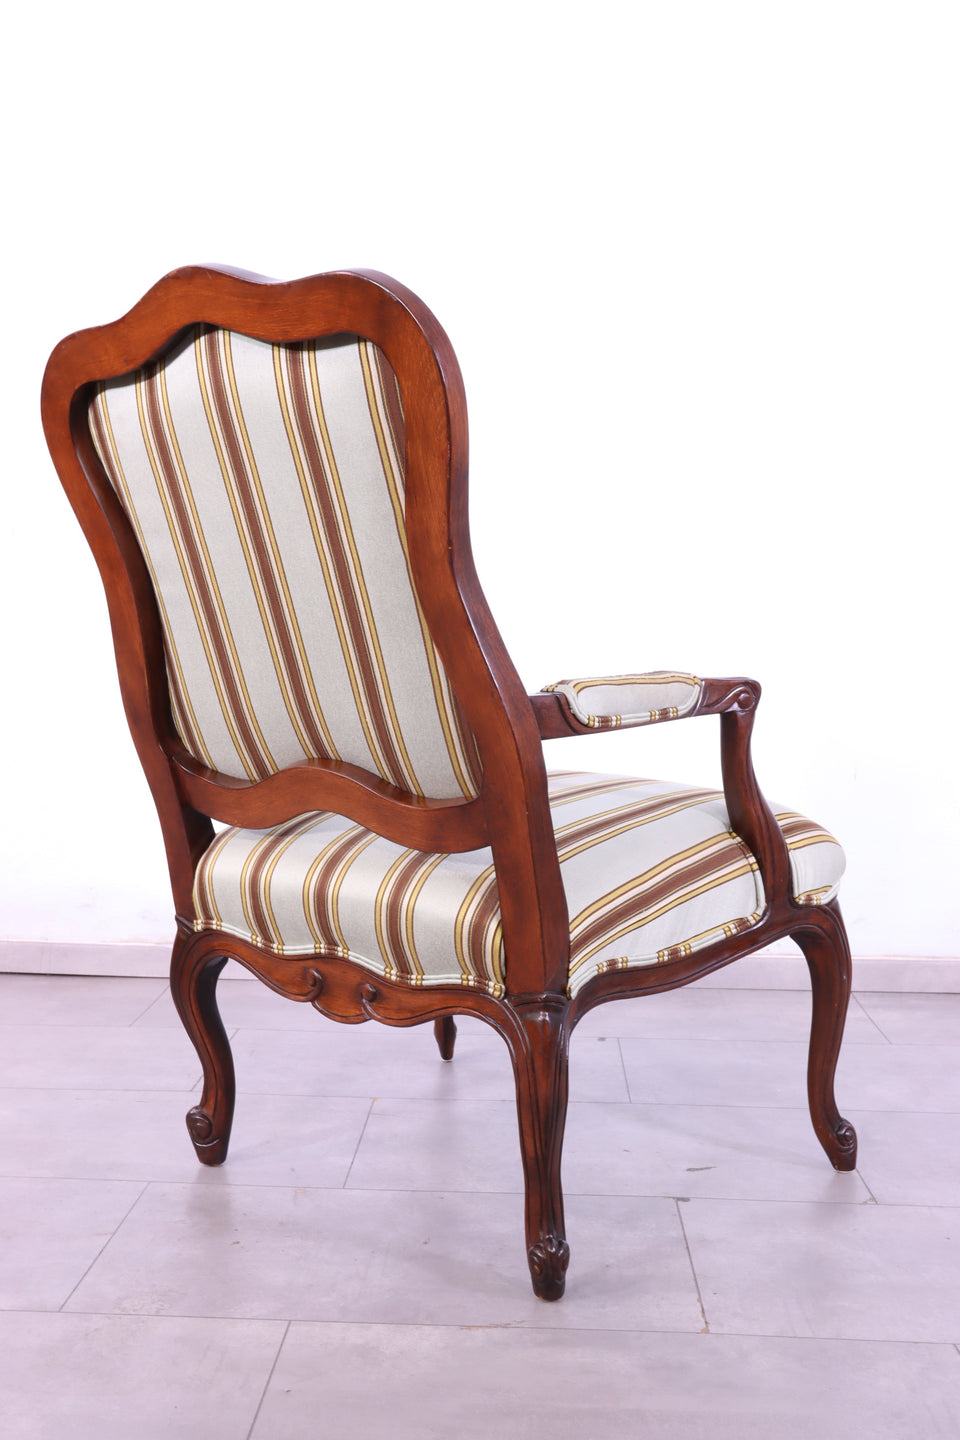 Original Drexel Heritage Sessel Monica Chair Chippendale Relax Sessel 1 von 2